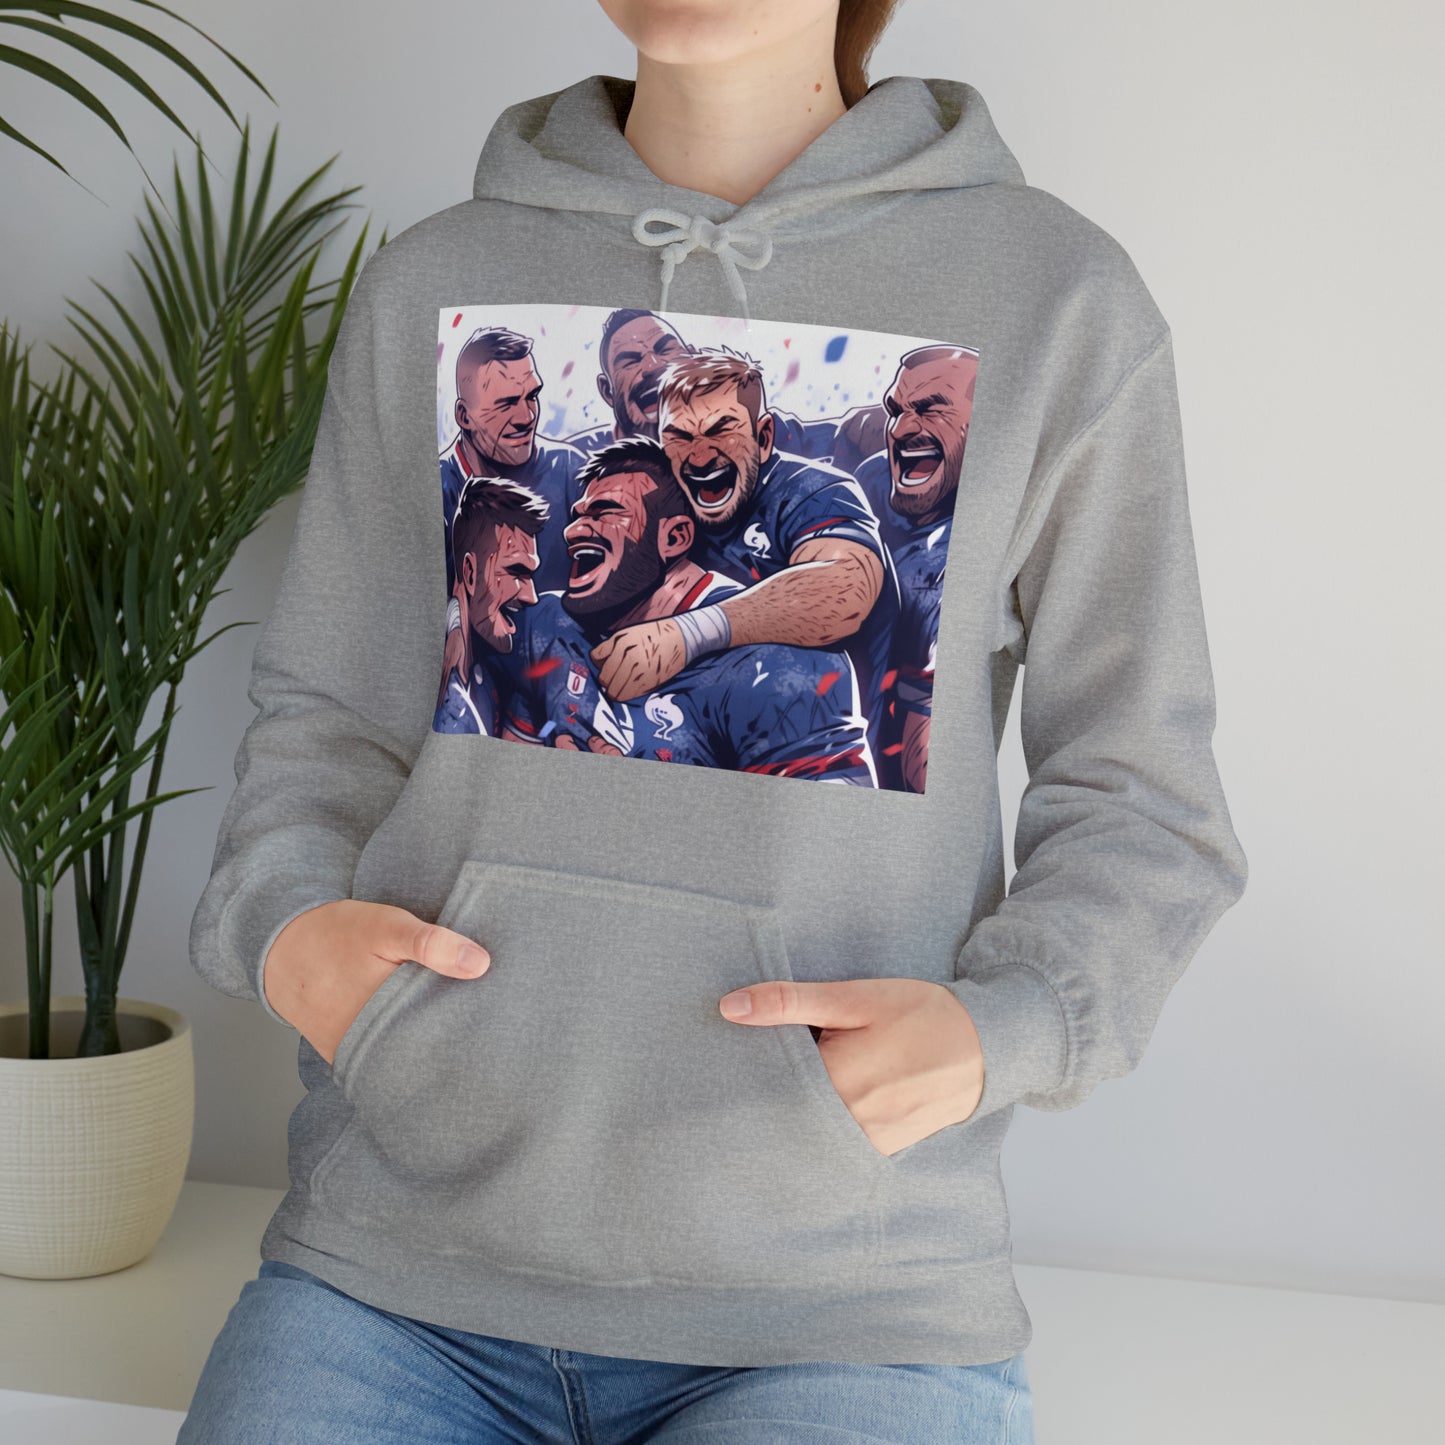 Post Match France - light hoodies